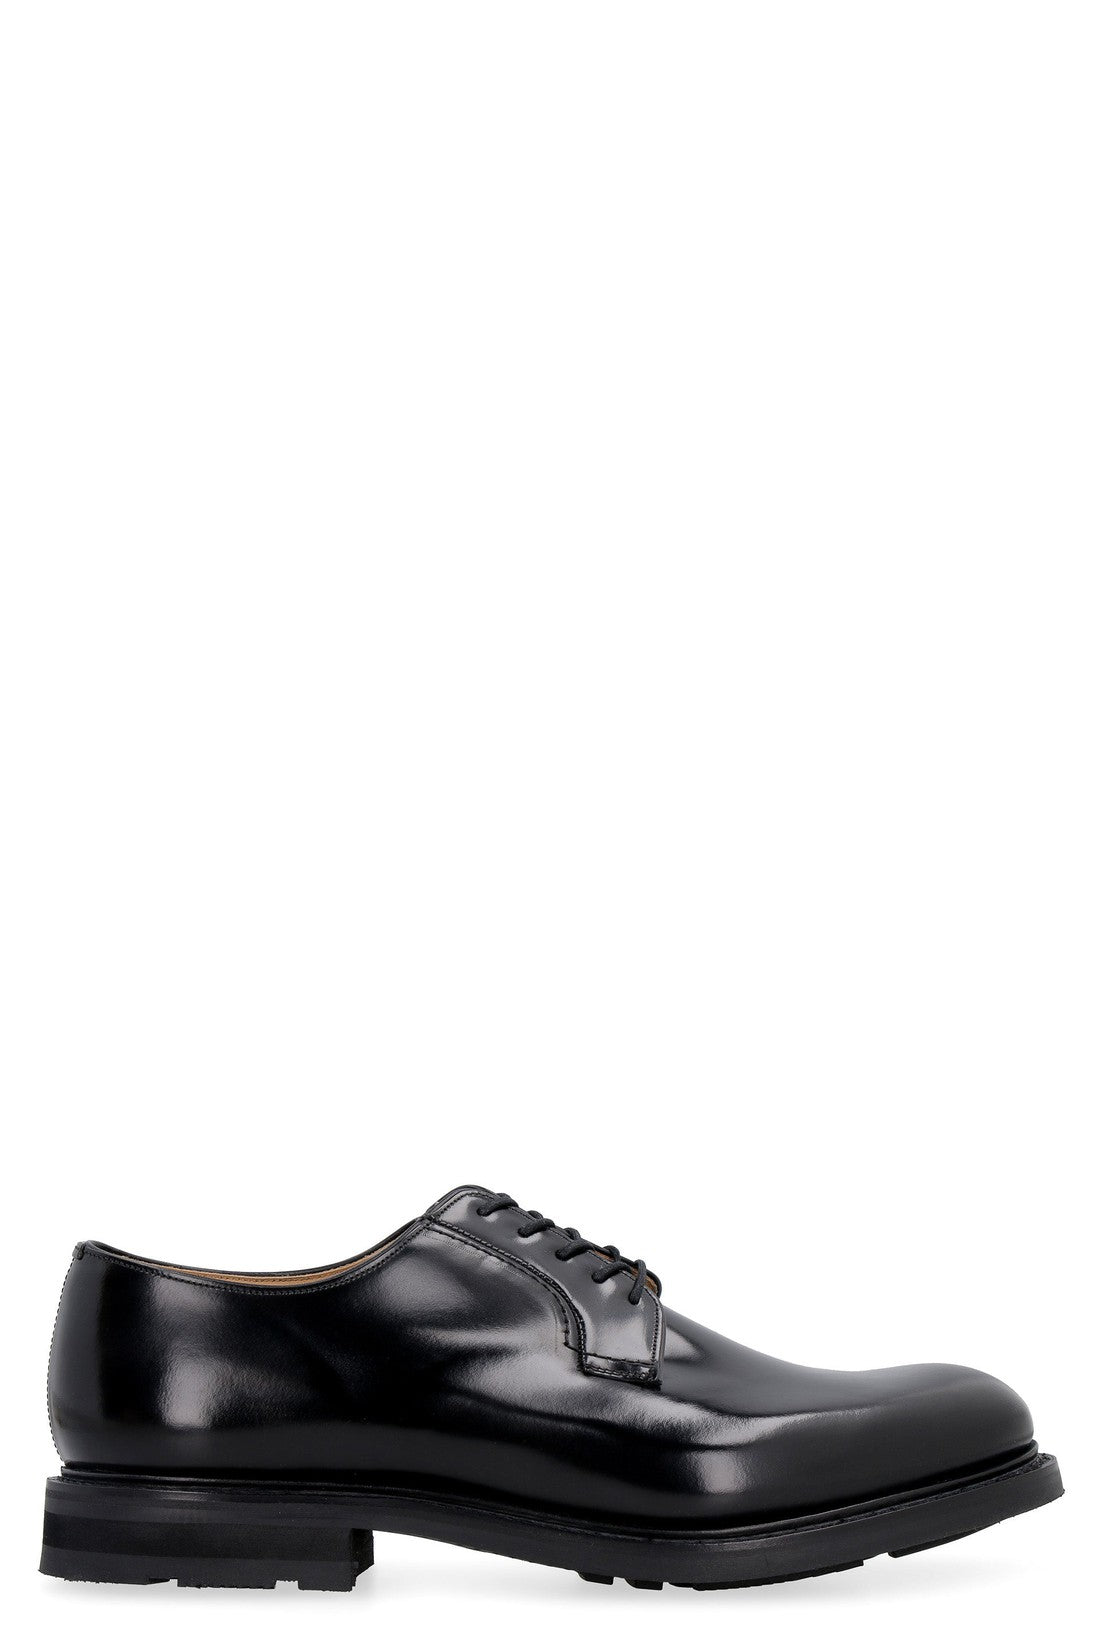 Church's-OUTLET-SALE-Leather lace-up shoes-ARCHIVIST